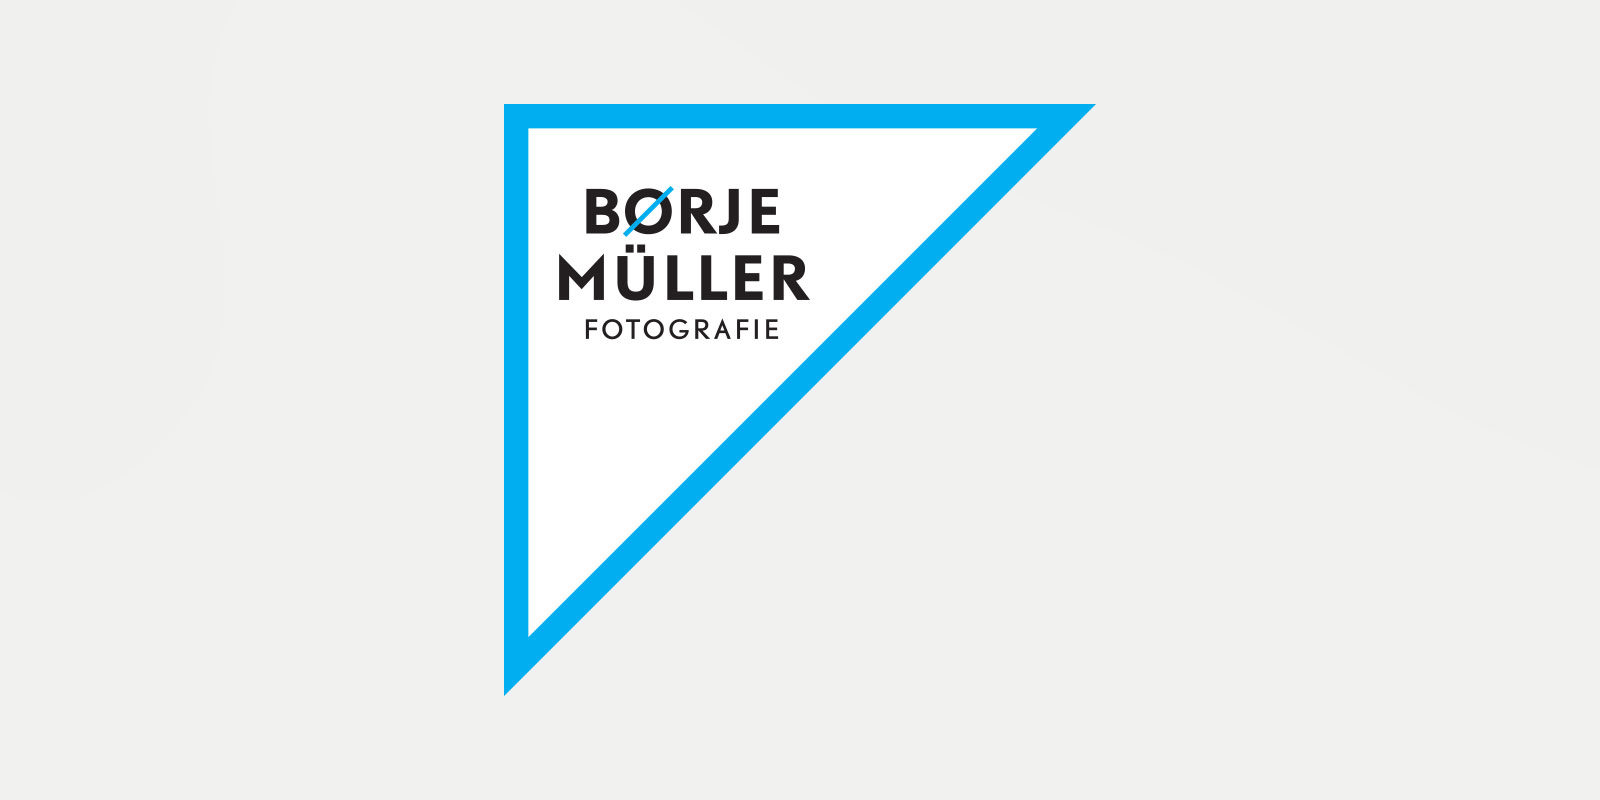 Börje Müller